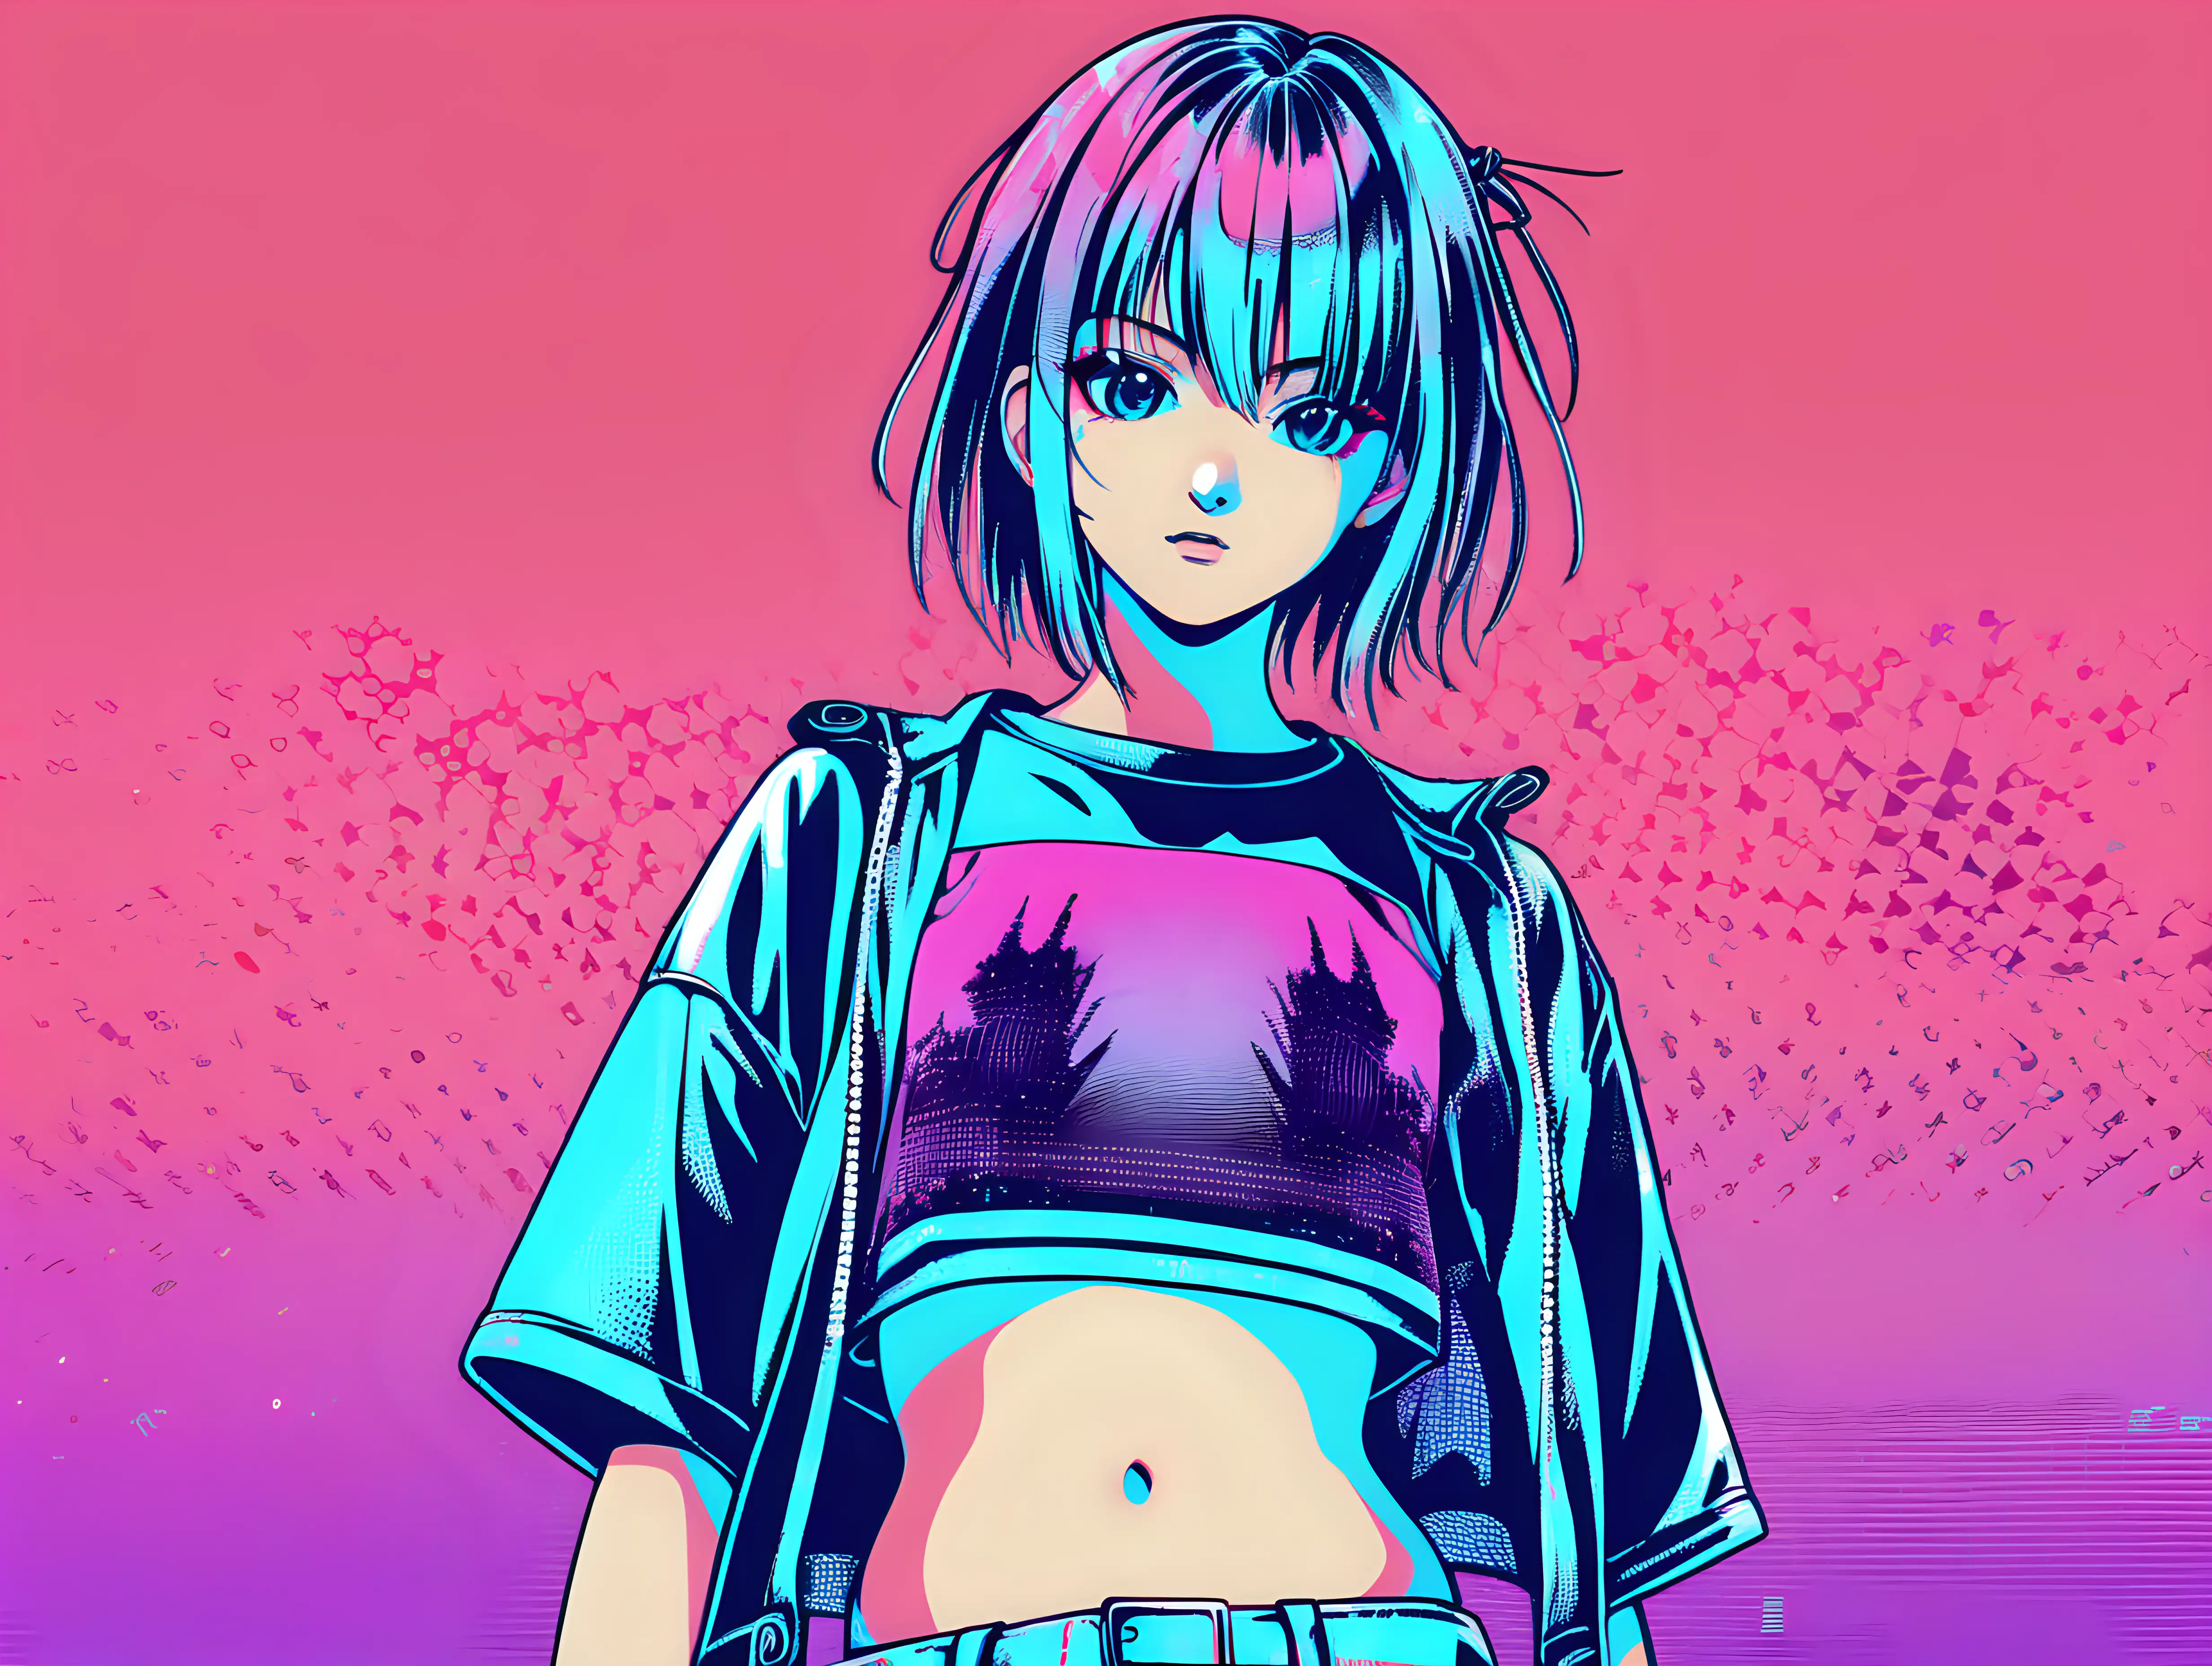 Cyberpunk Anime Girl Posterized in Glitch Screen with MidriffBaring Short Shirt